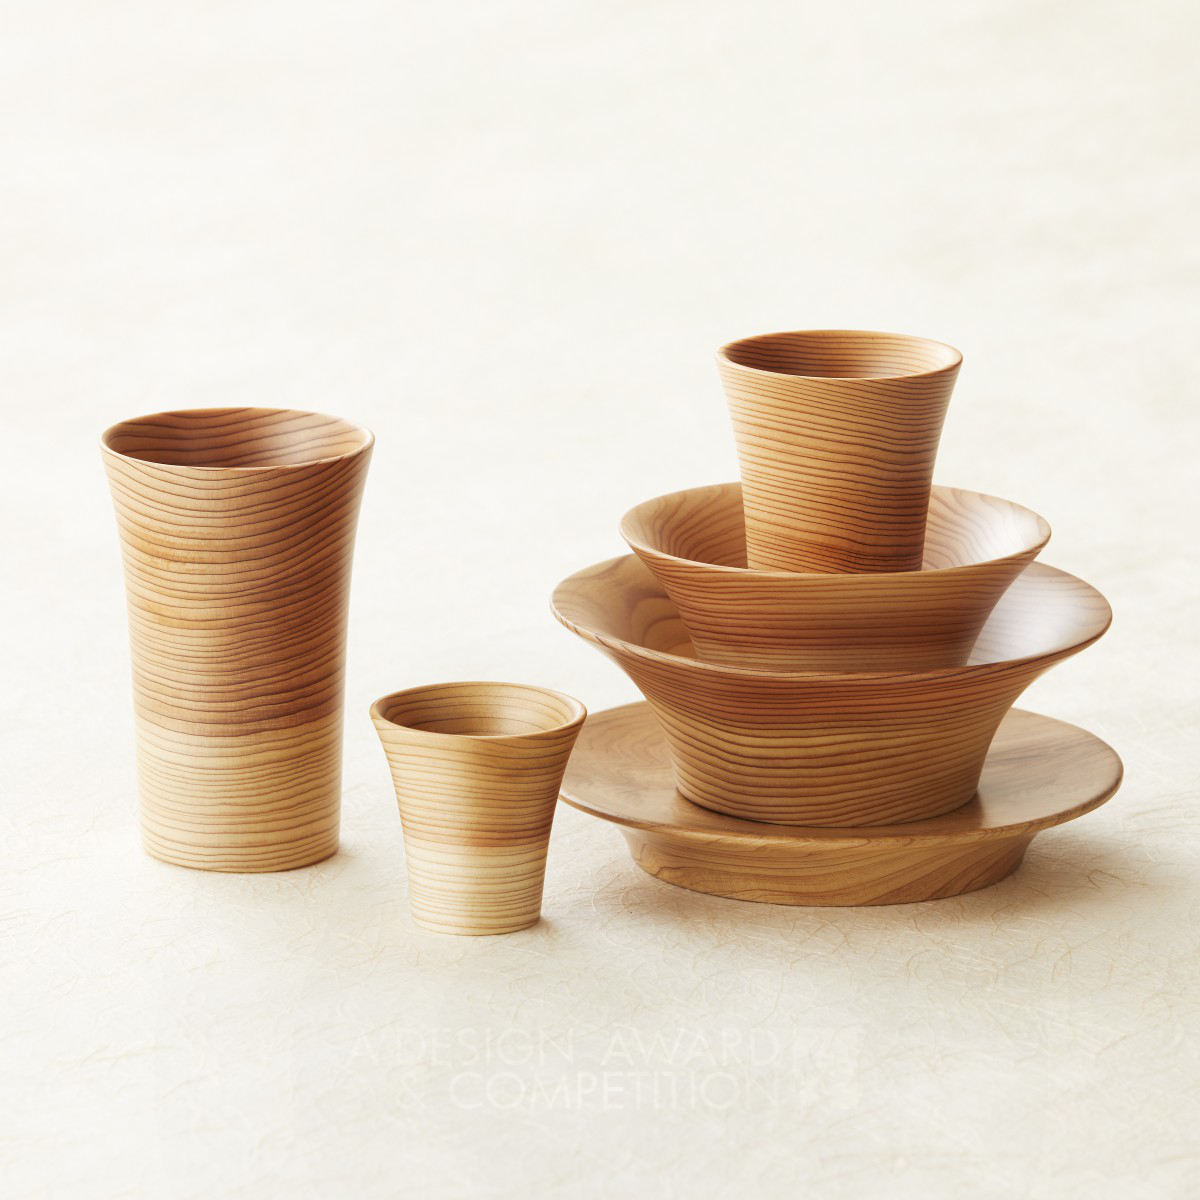 Kamiyama SHIZQ Project Wooden Tableware